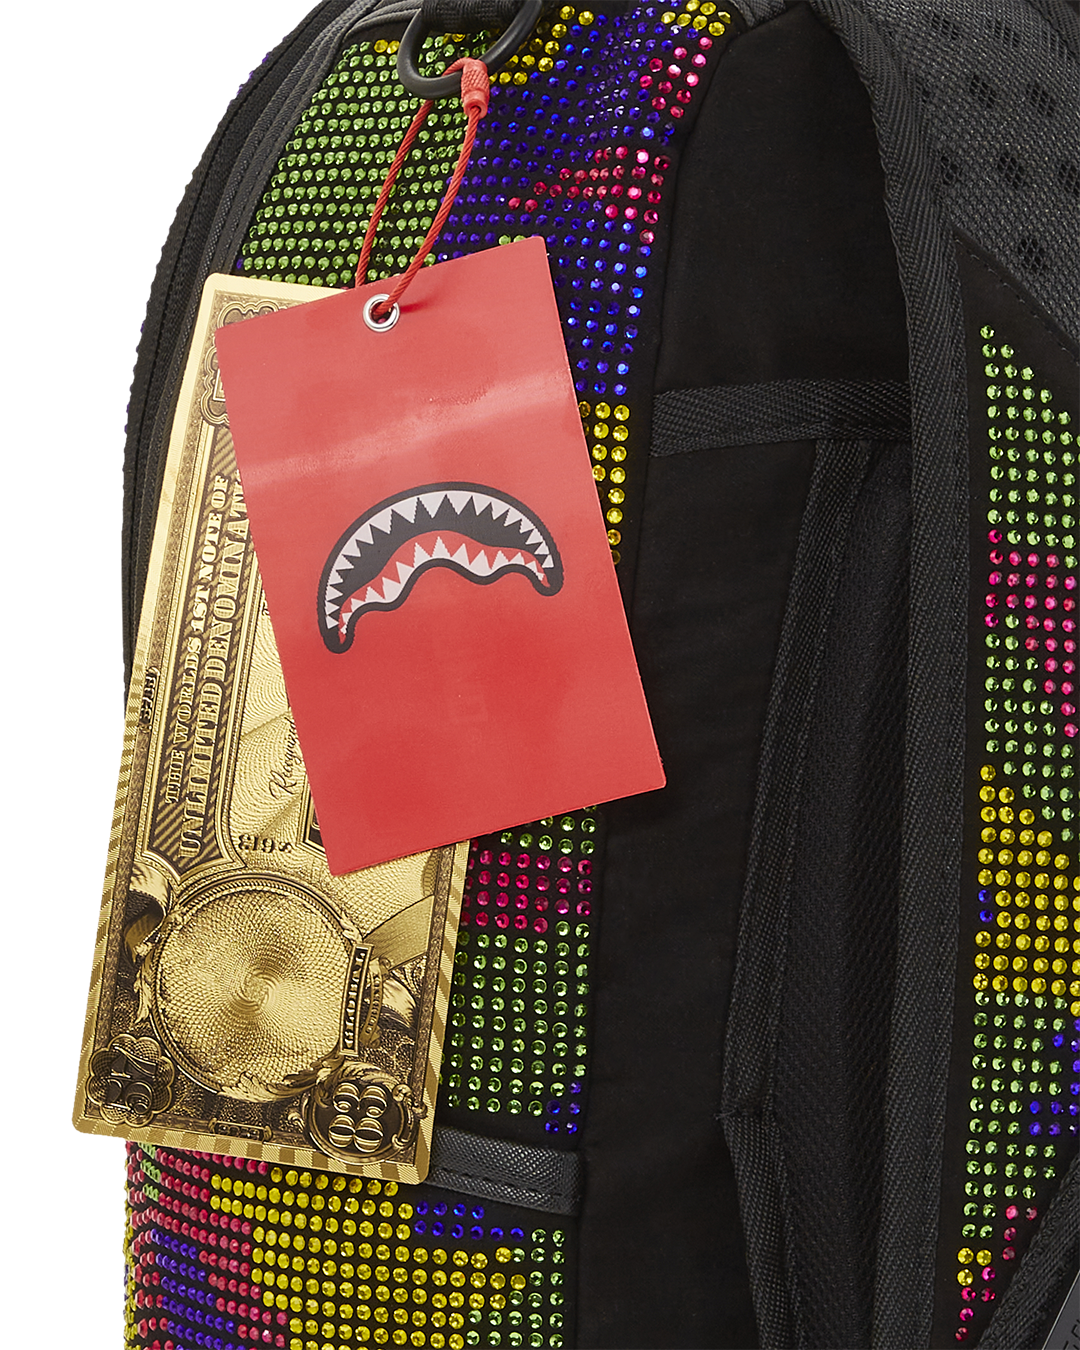 Sprayground Gold Backpack in Metallic for Men